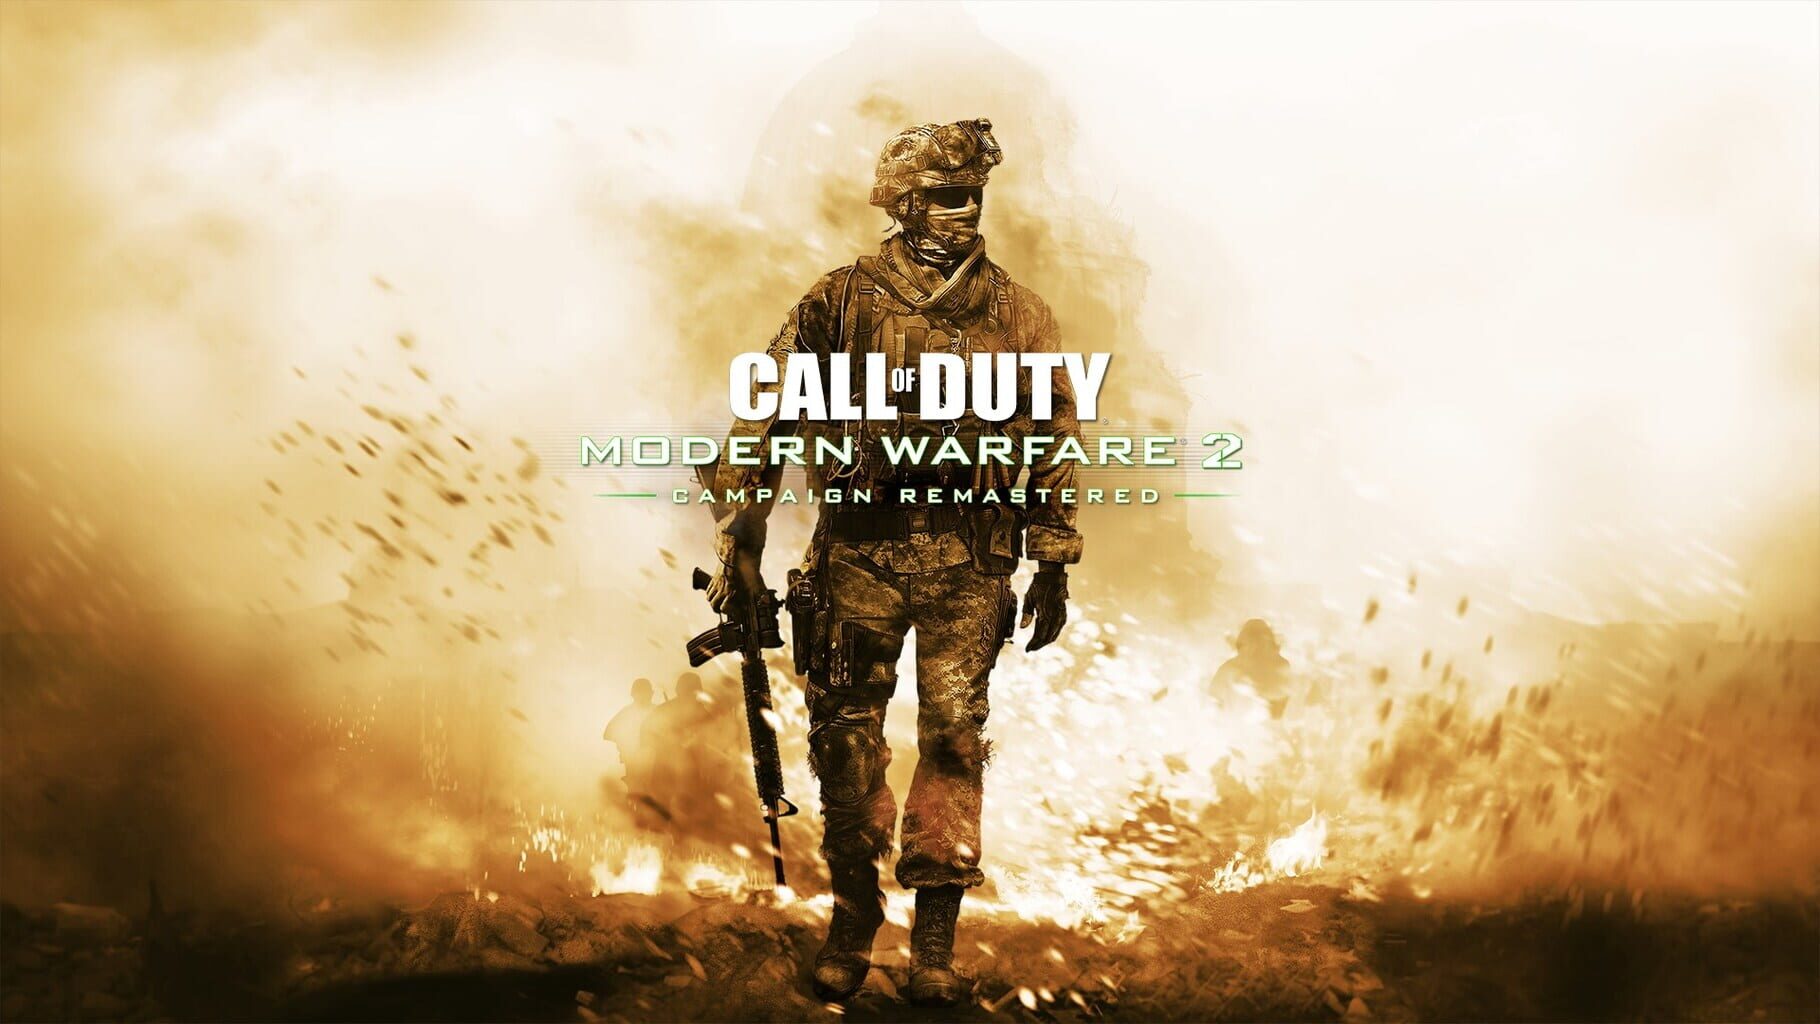 Arte - Call of Duty: Modern Warfare 2 Campaign Remastered